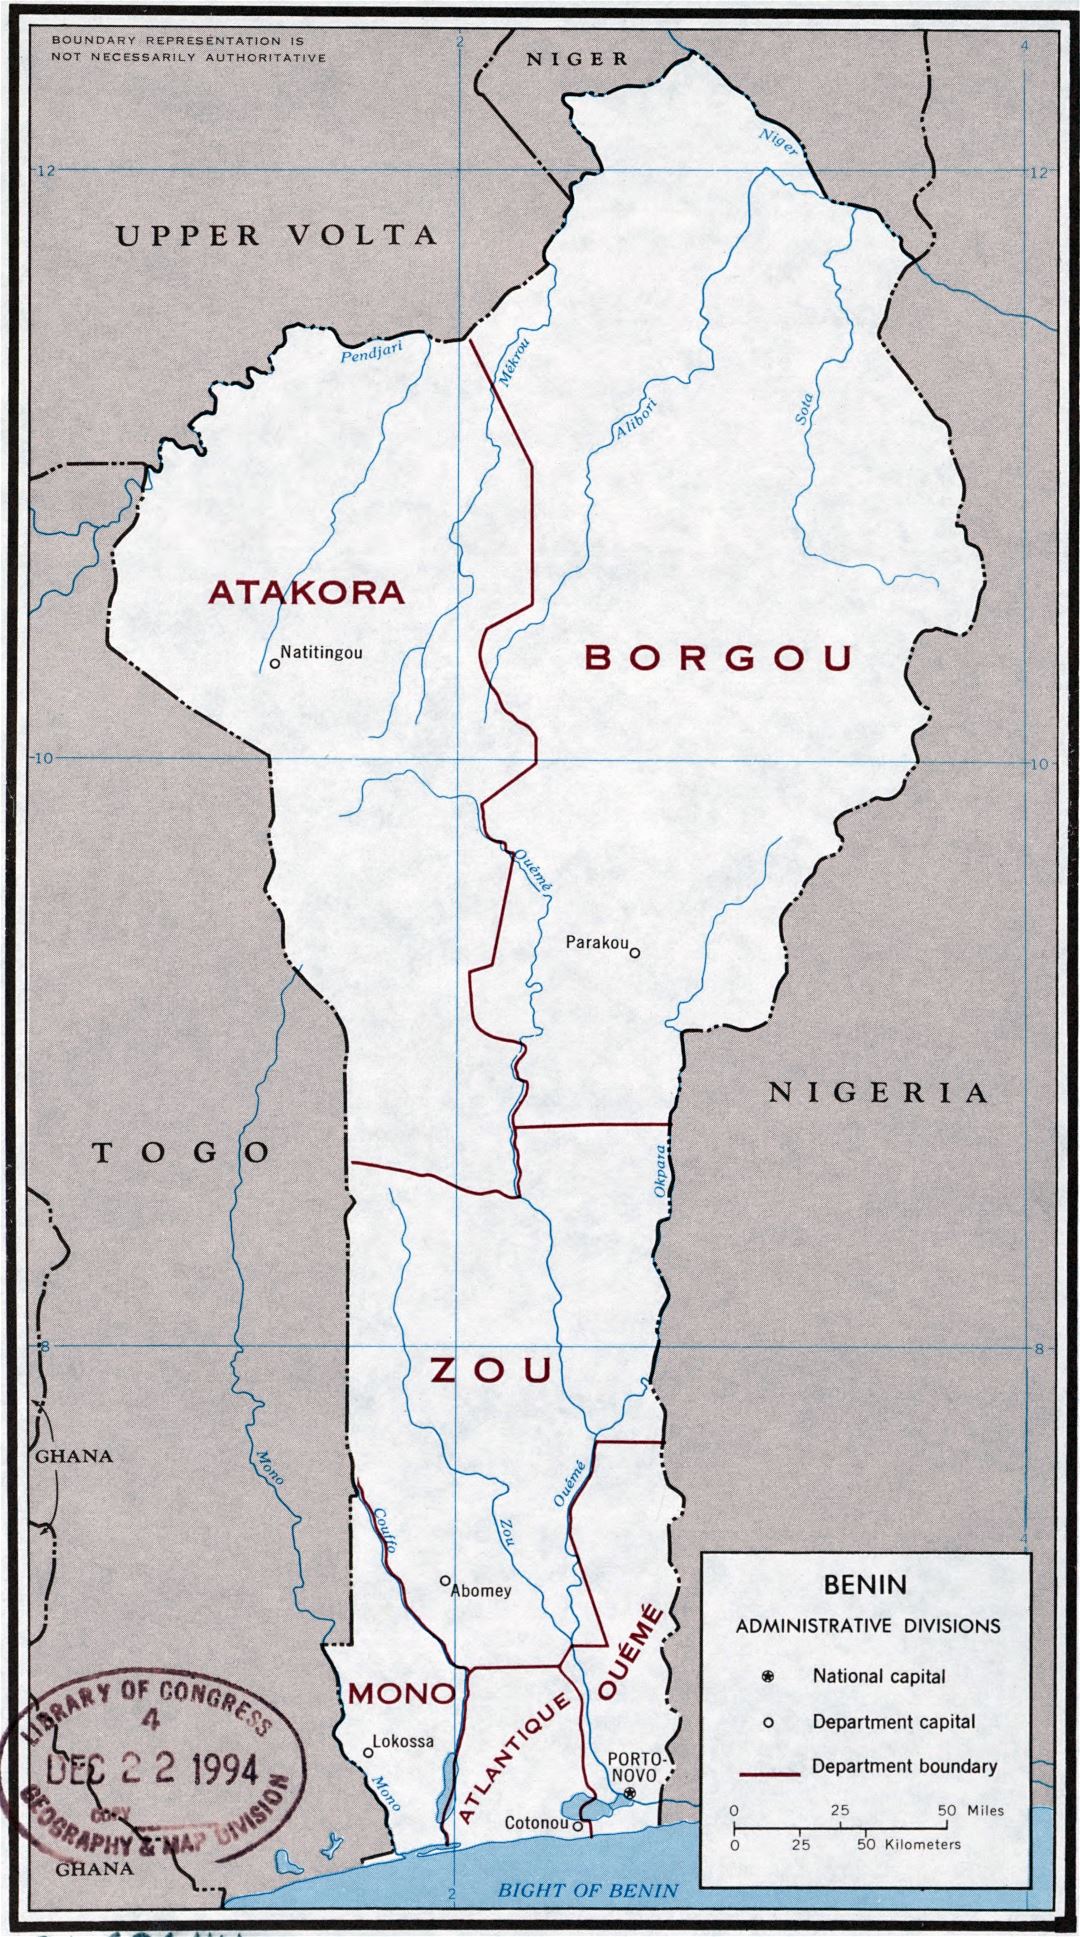 A gran escala mapa de administrativas divisiones de Benin - 1977